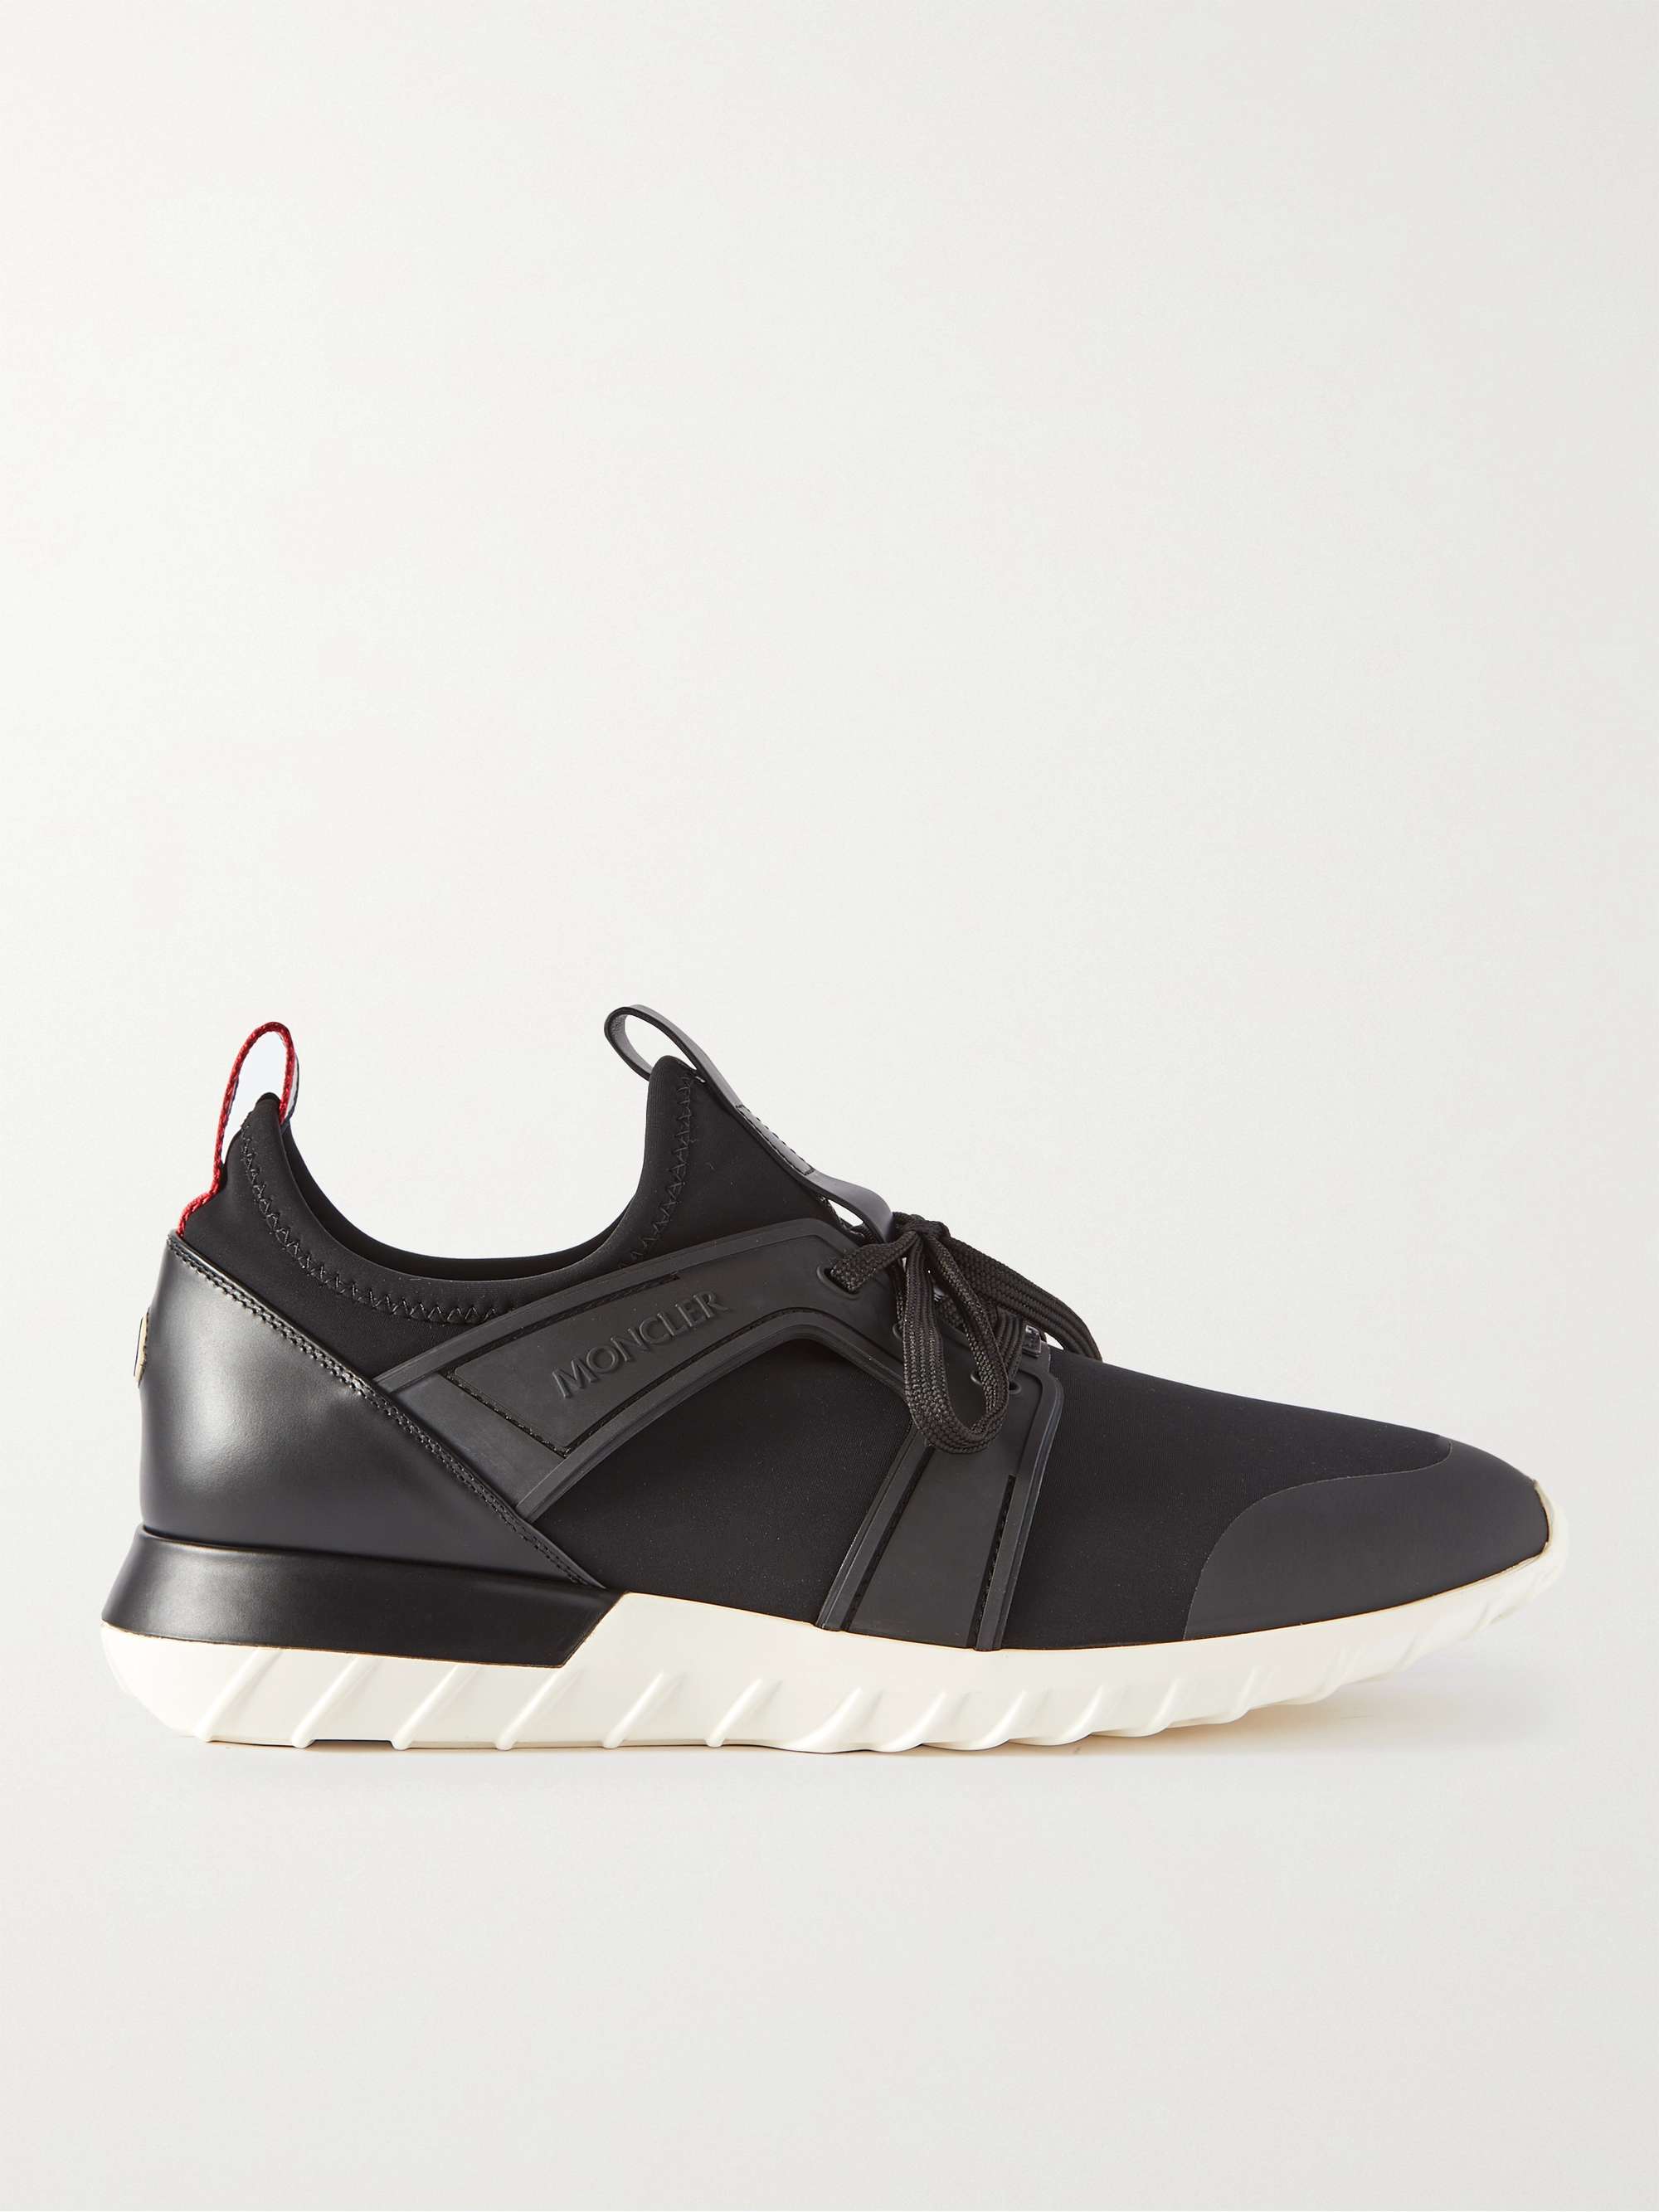 Black Emilien Rubber and Leather-Trimmed Neoprene Sneakers | MONCLER | MR PORTER